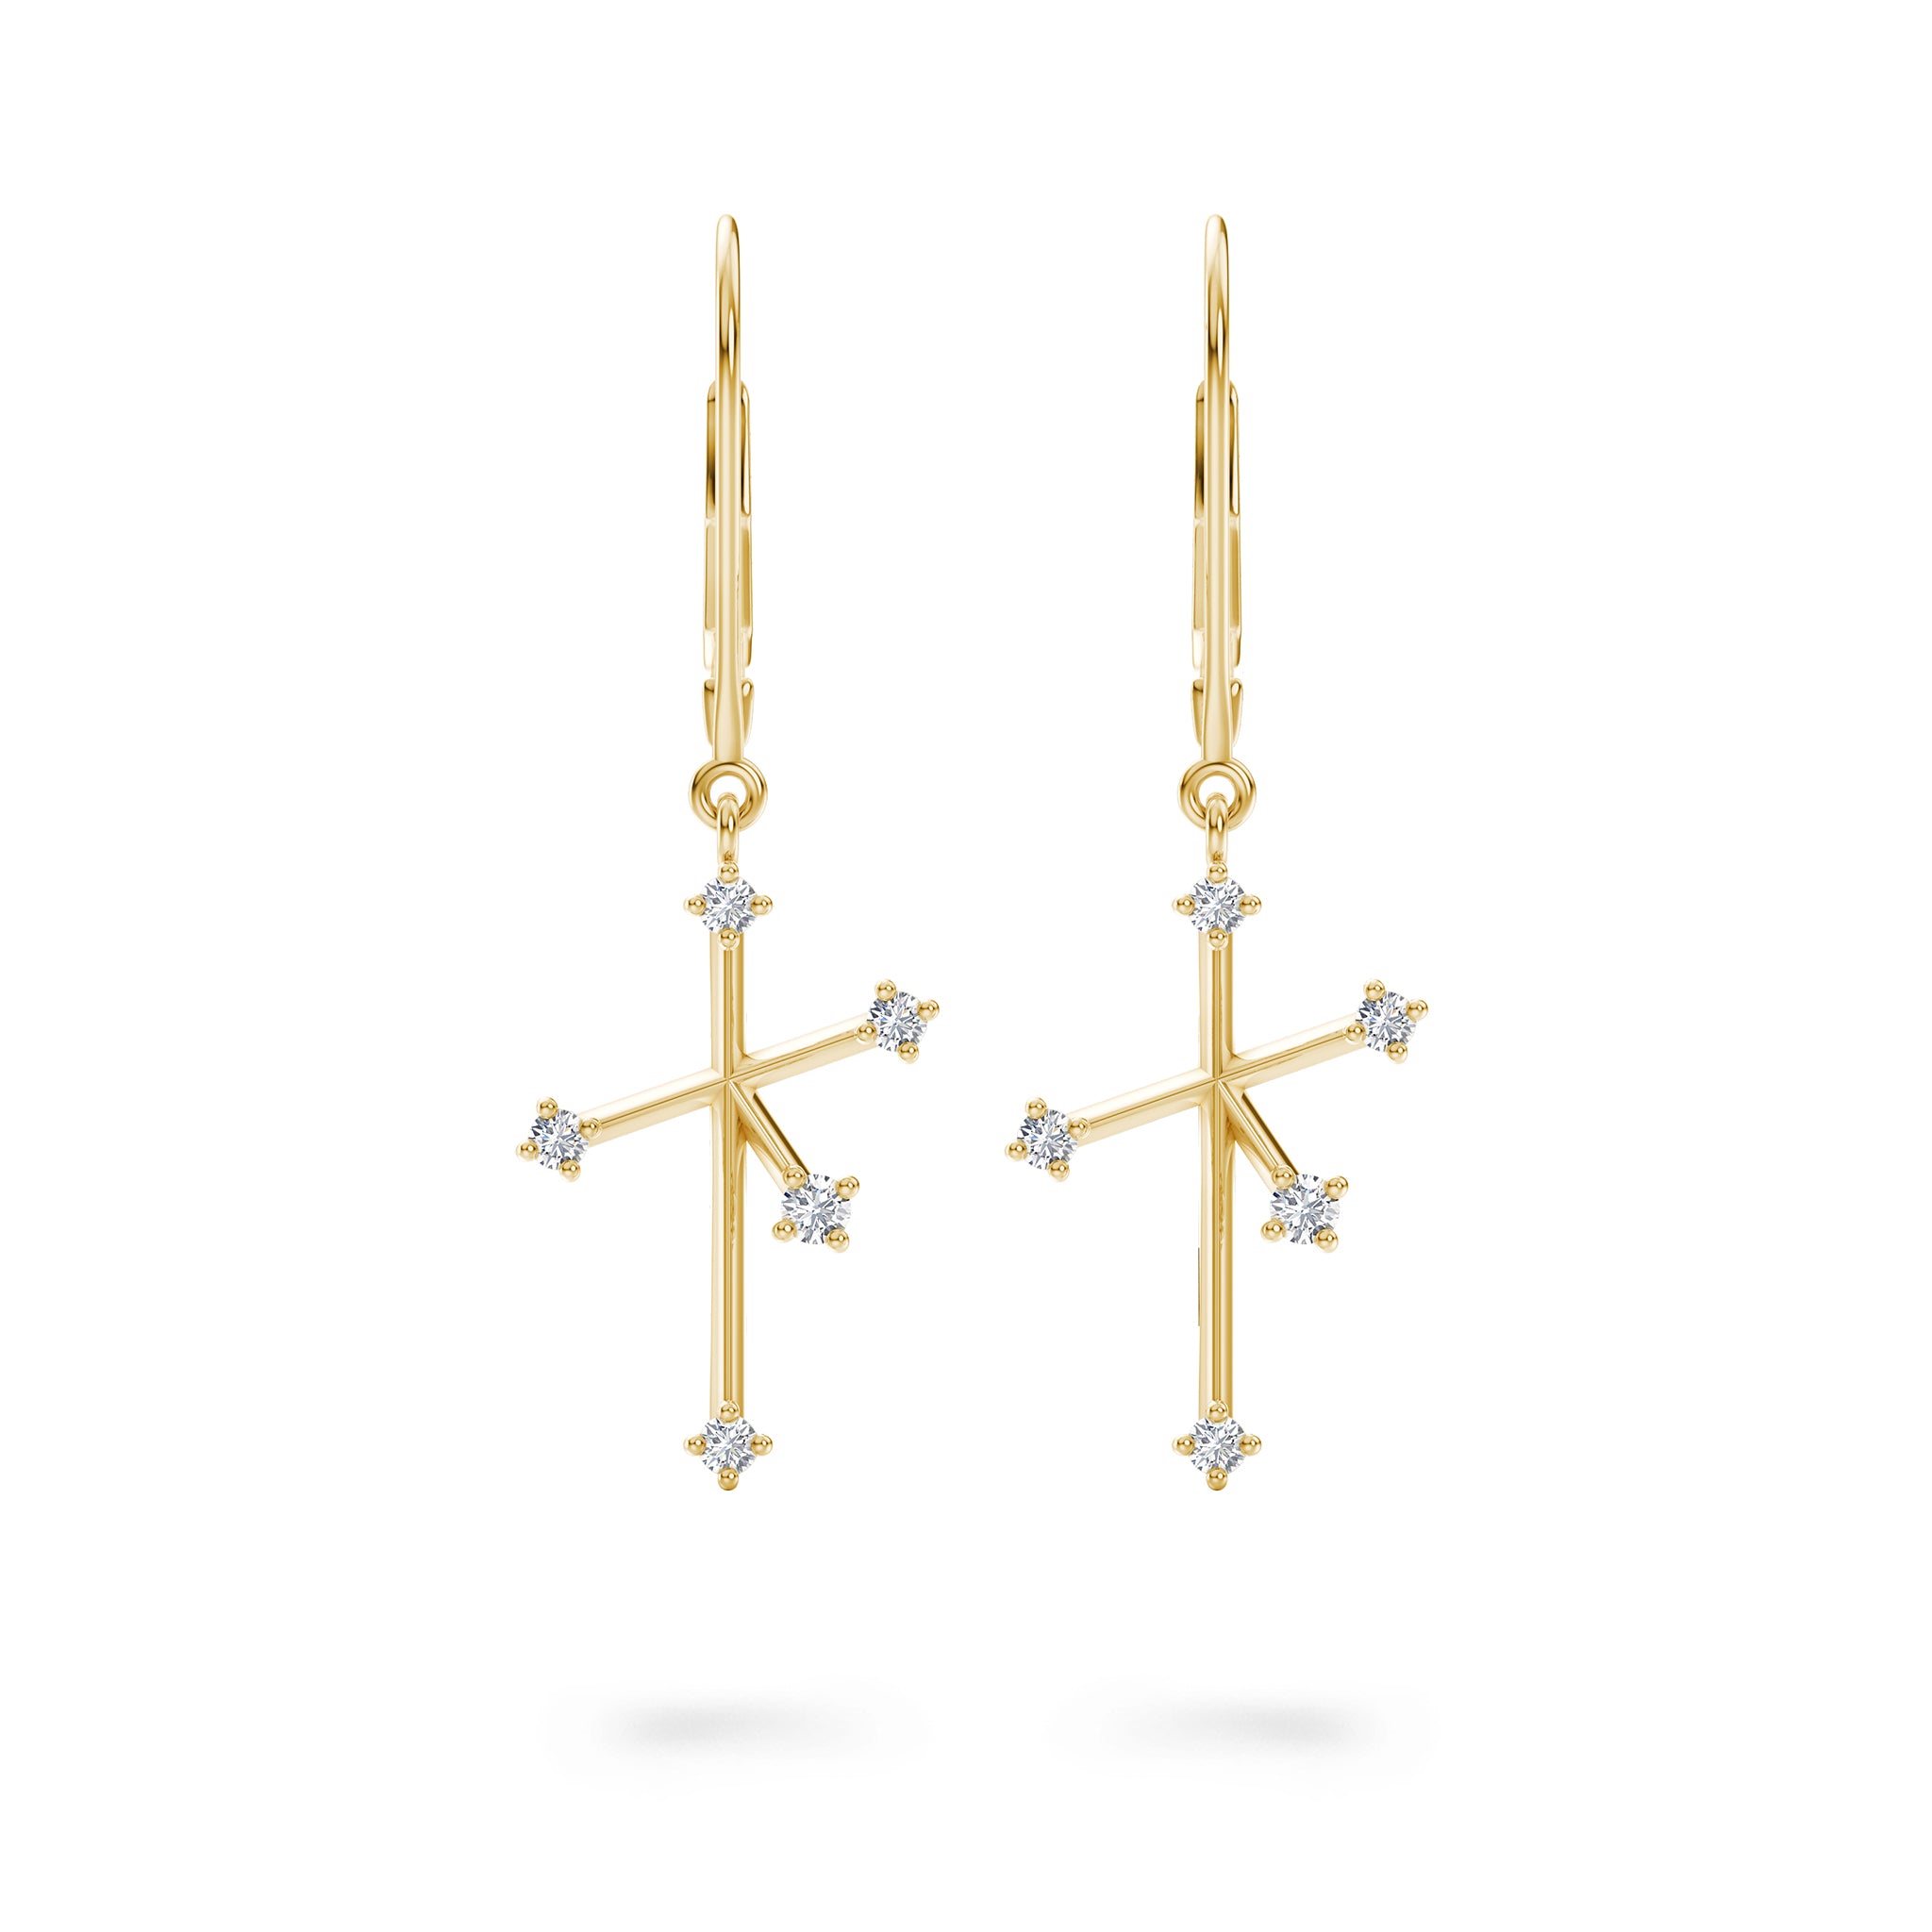 Southern Cross Diamond Drop Earrings Crafted in 14K Yellow Gold - SHIMANSKY.CO.ZA